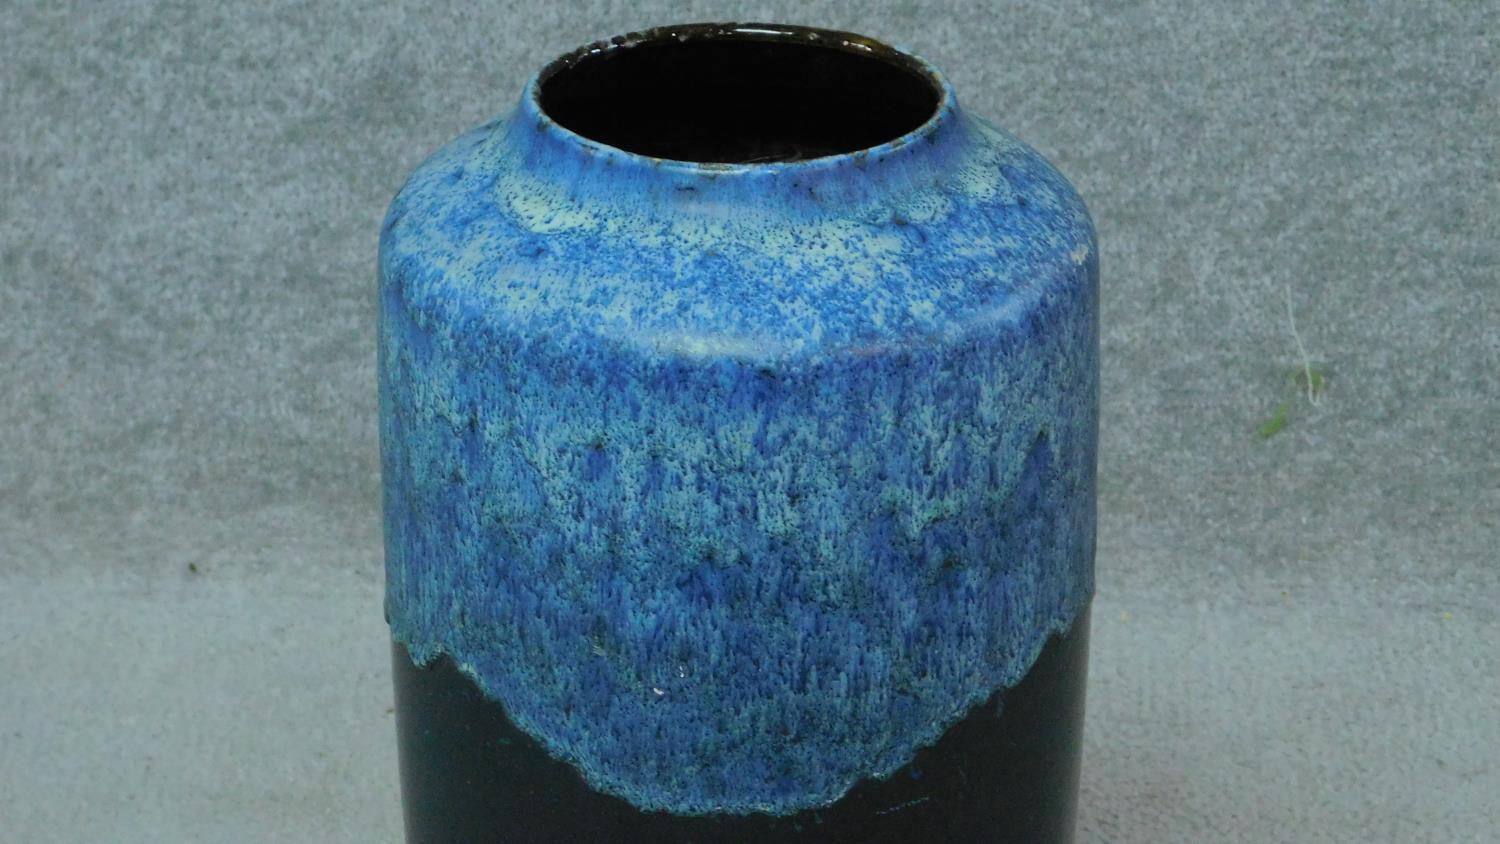 A Vintage West German blue turquoise and black glaze Fat Lava pottery vase, by Scheurich. H.45cm - Image 2 of 4